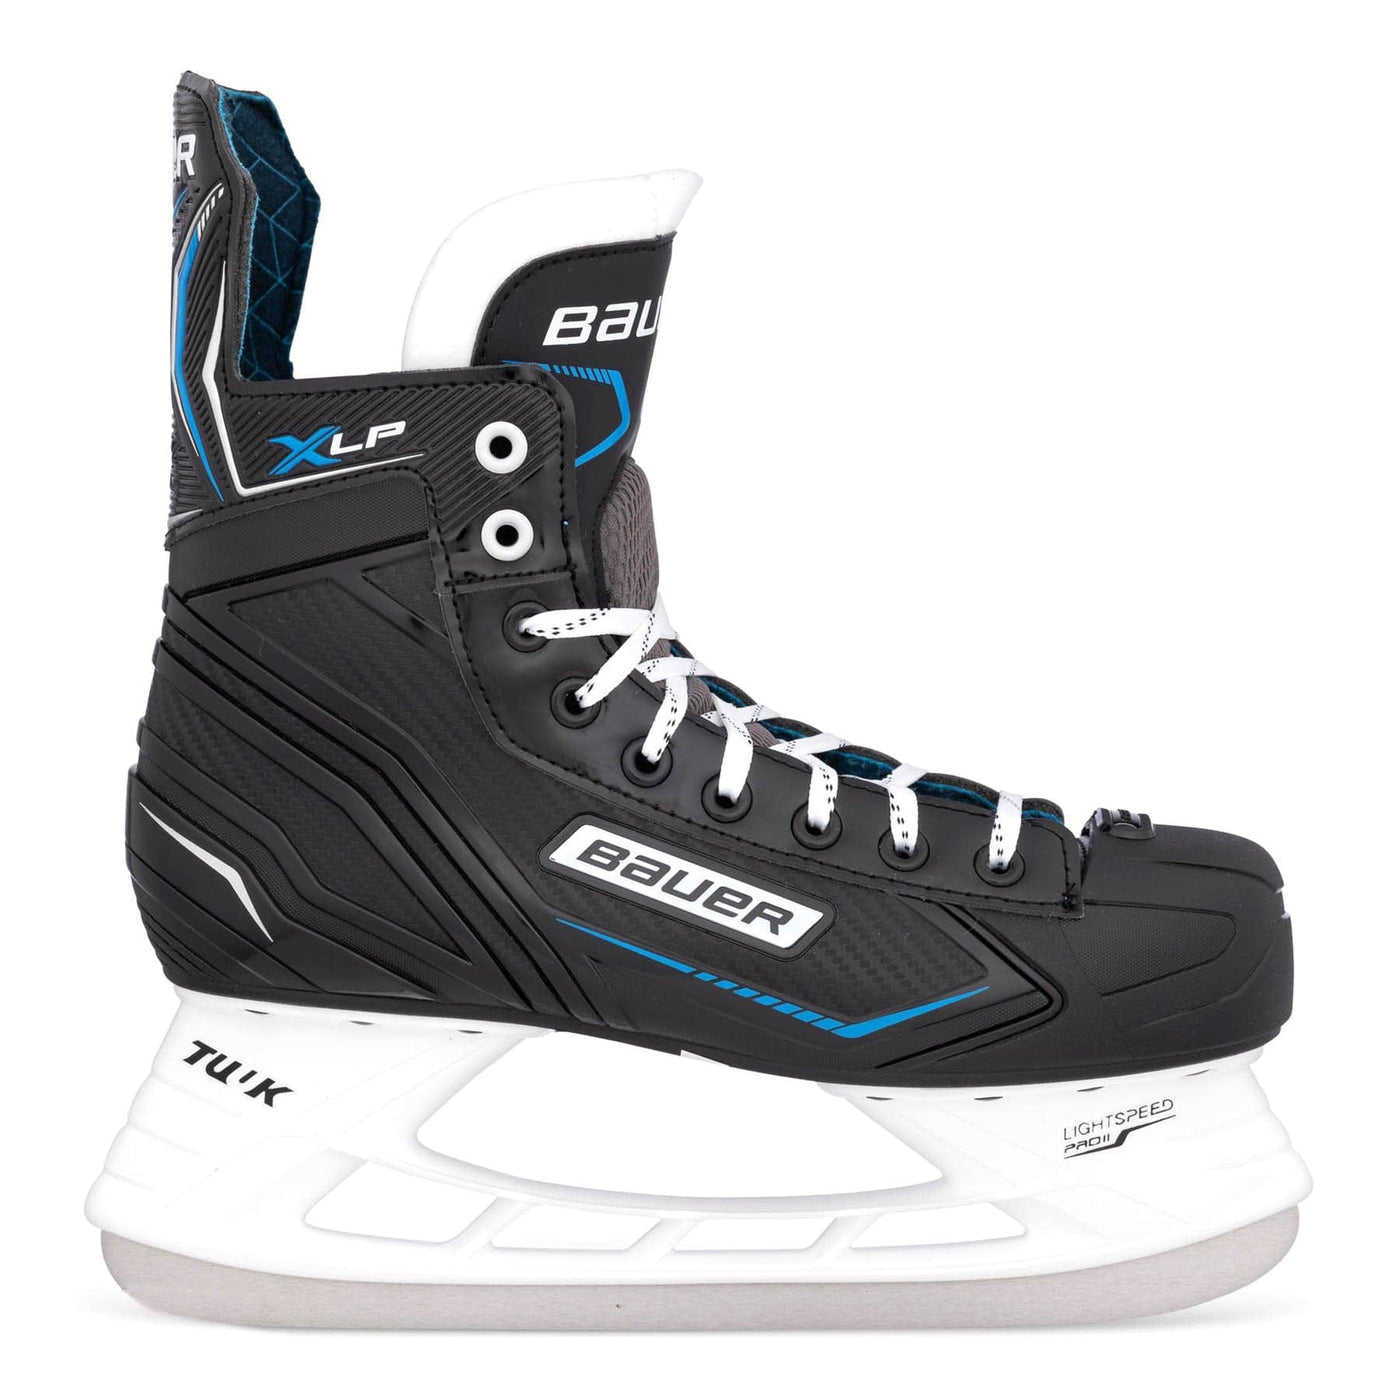 Bauer X-LP Intermediate Hockey Skates - The Hockey Shop Source For Sports